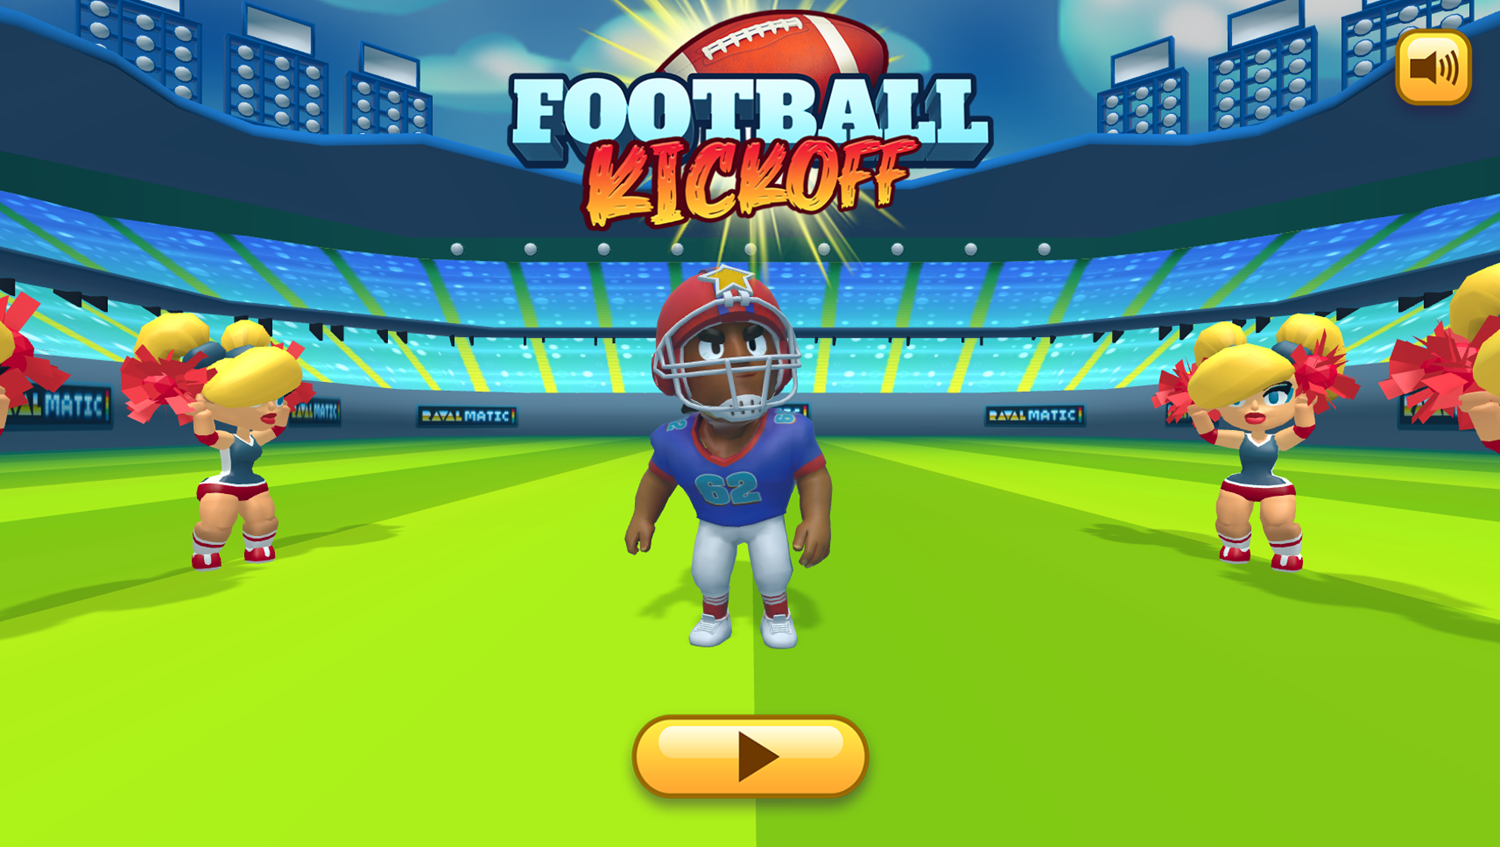 Football Kickoff Game Welcome Screen Screenshot.